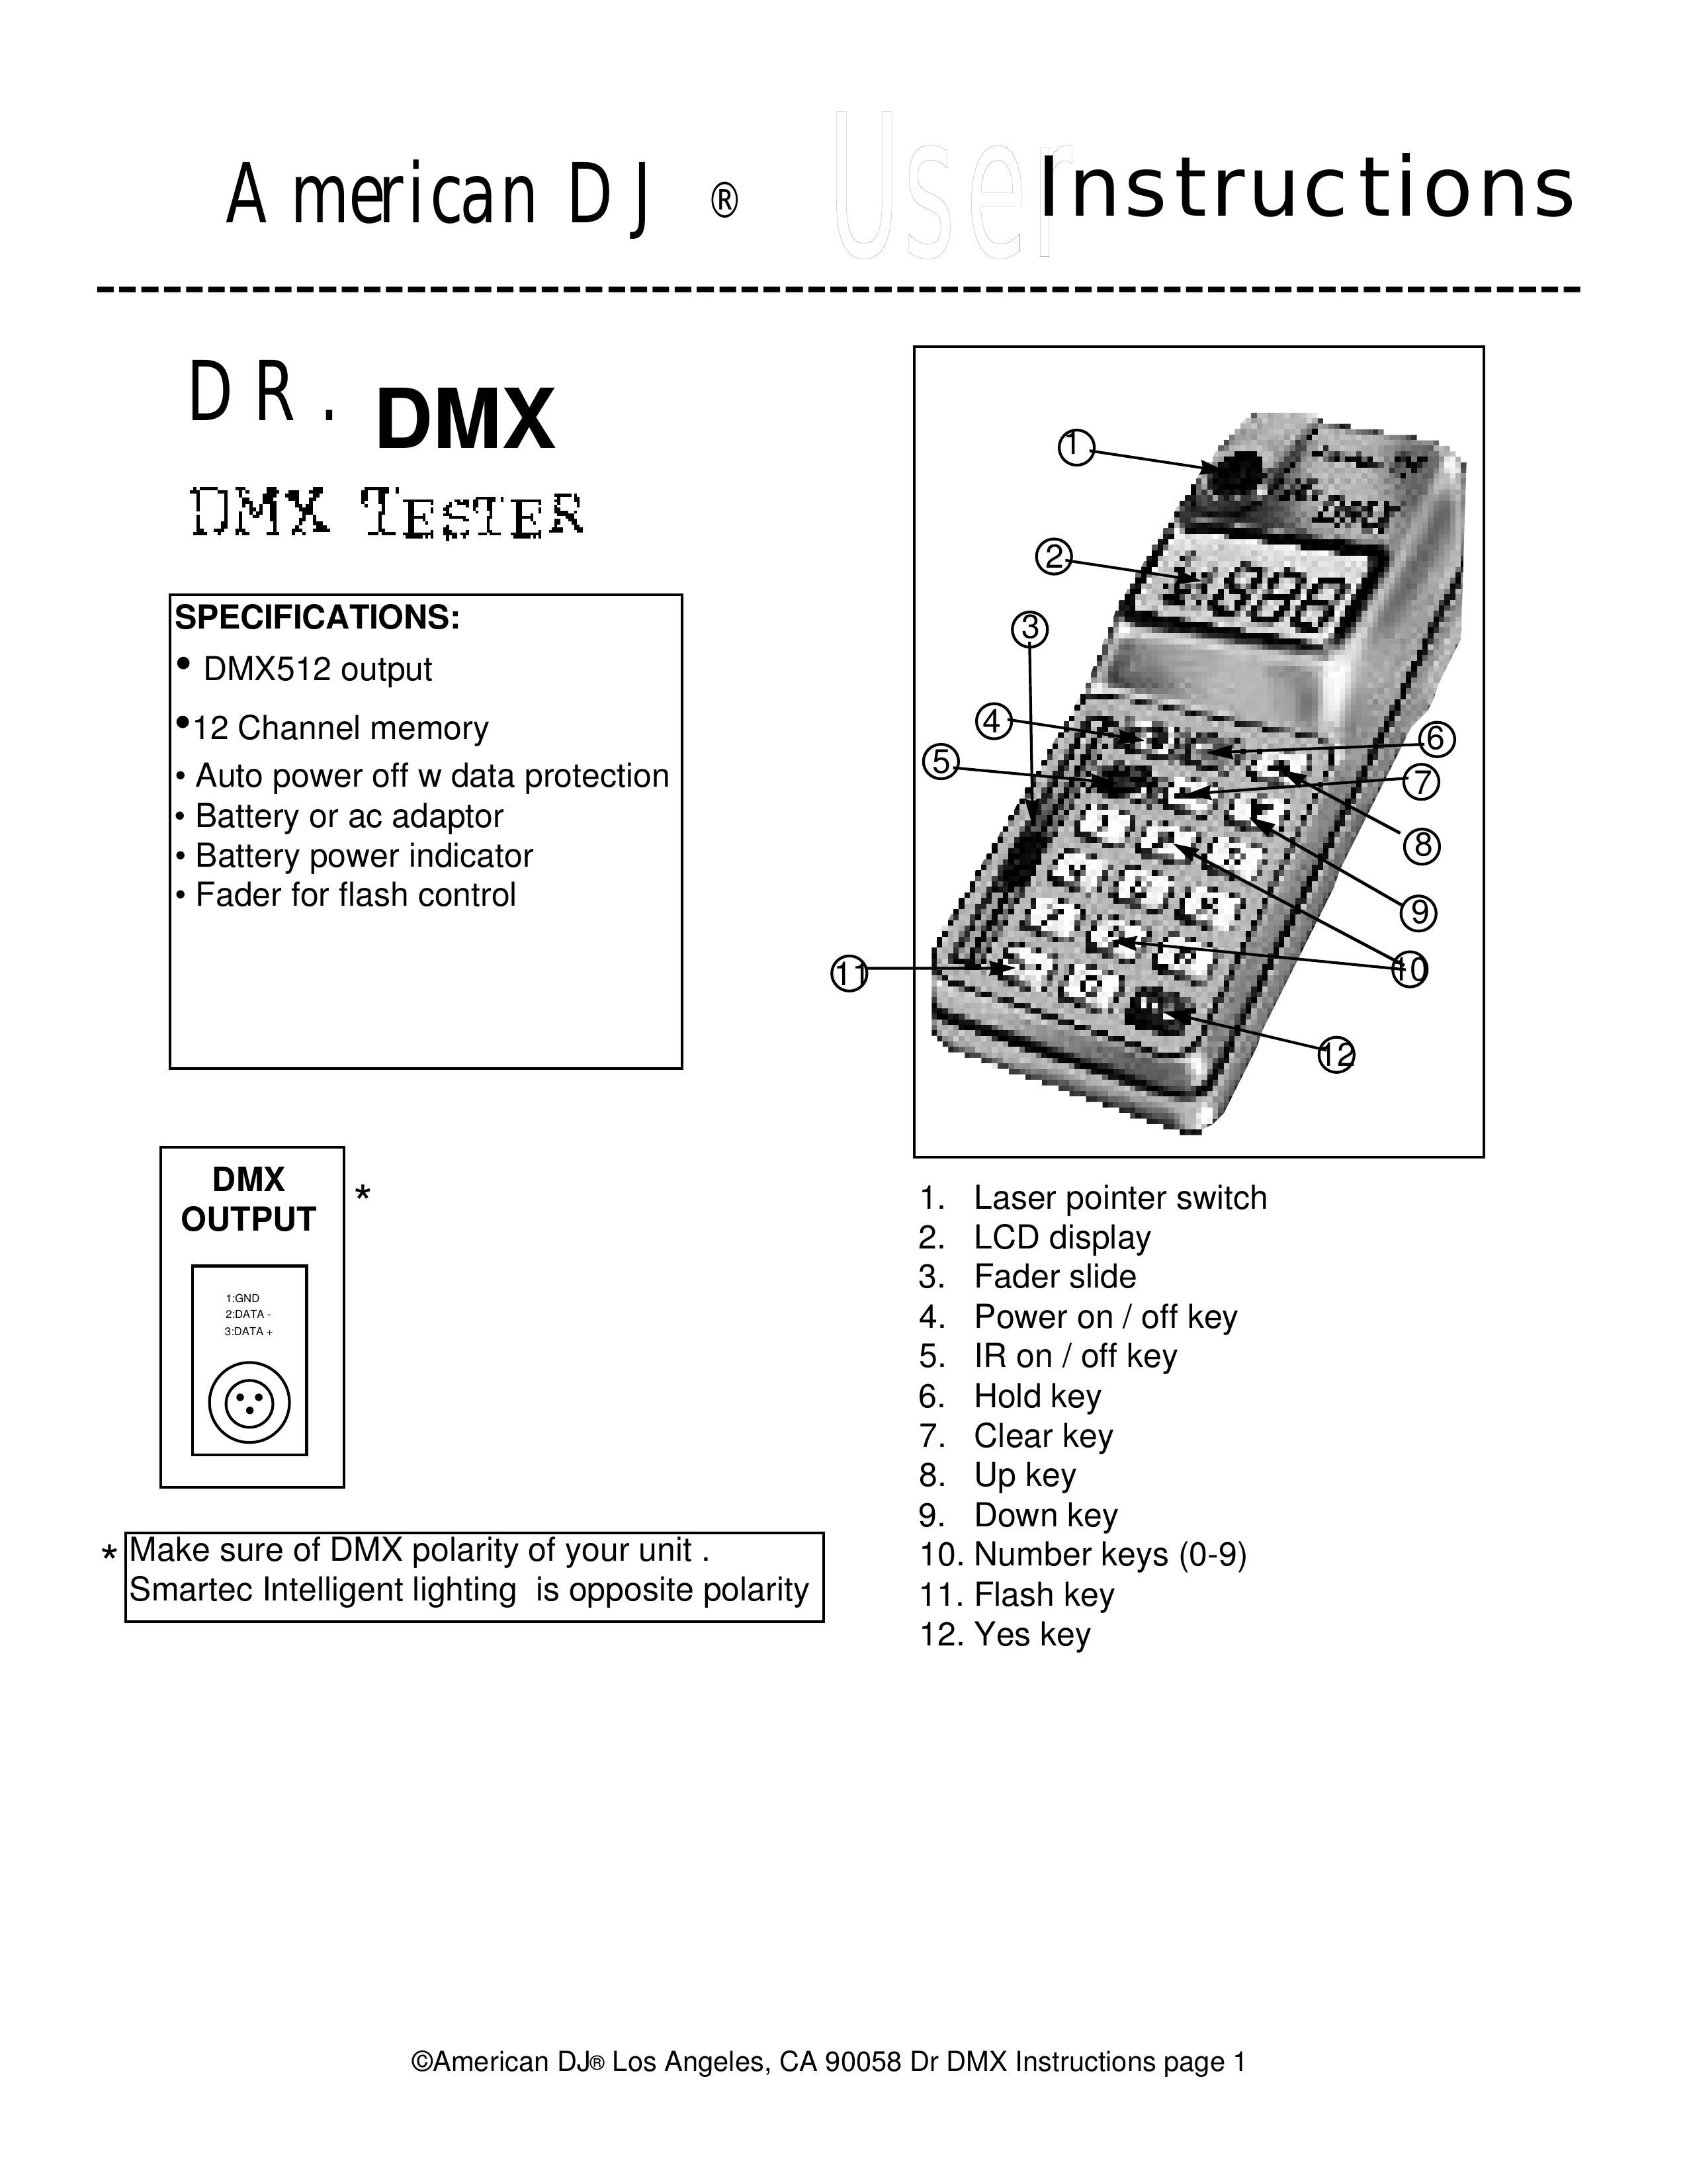 American DJ Dr. DMX DJ Equipment User Manual (Page 1)